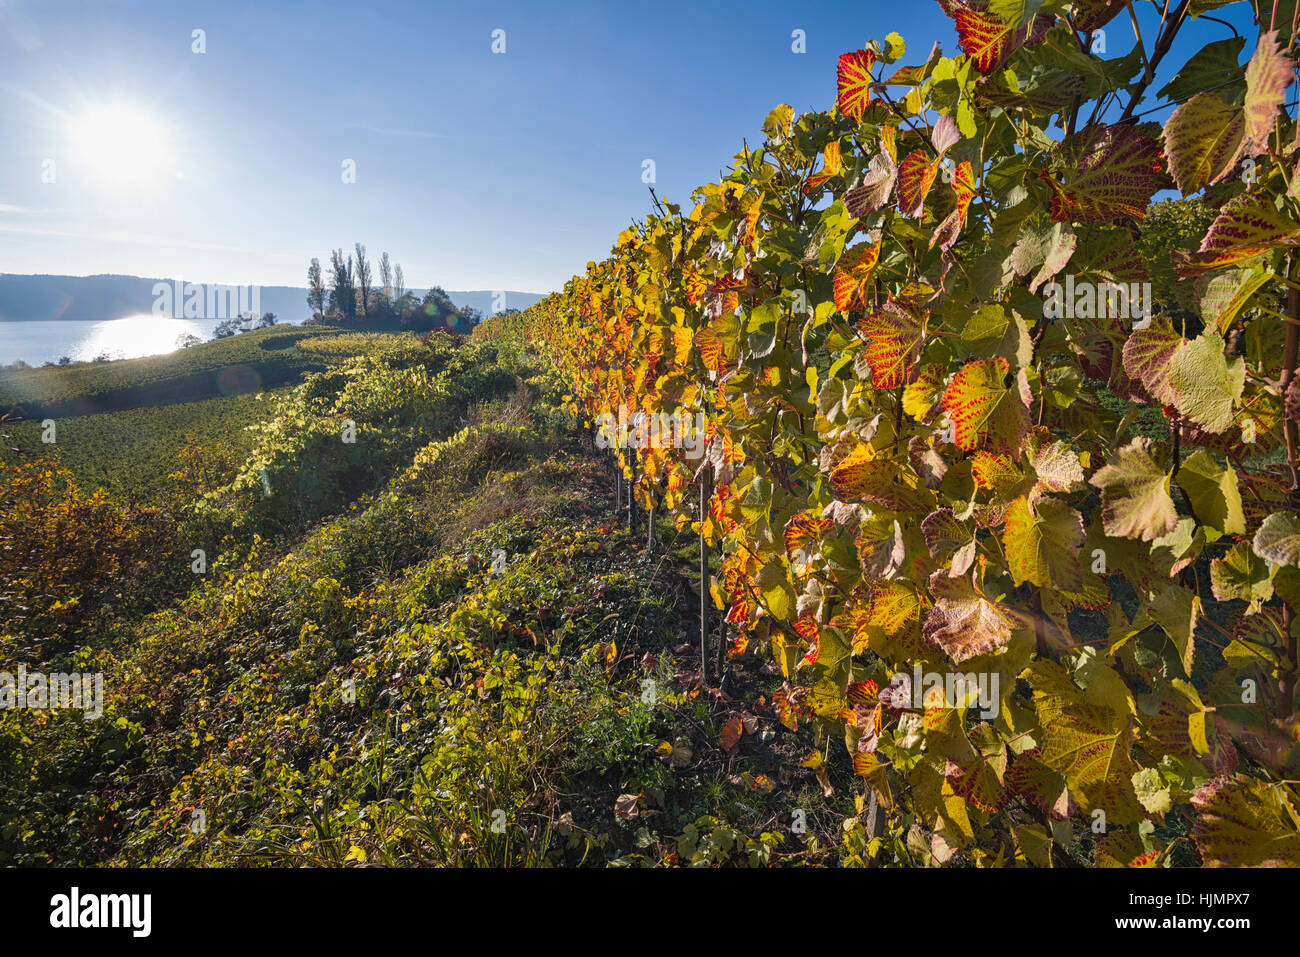 Germany, Ueberlingen, vineyards in autumn Stock Photo